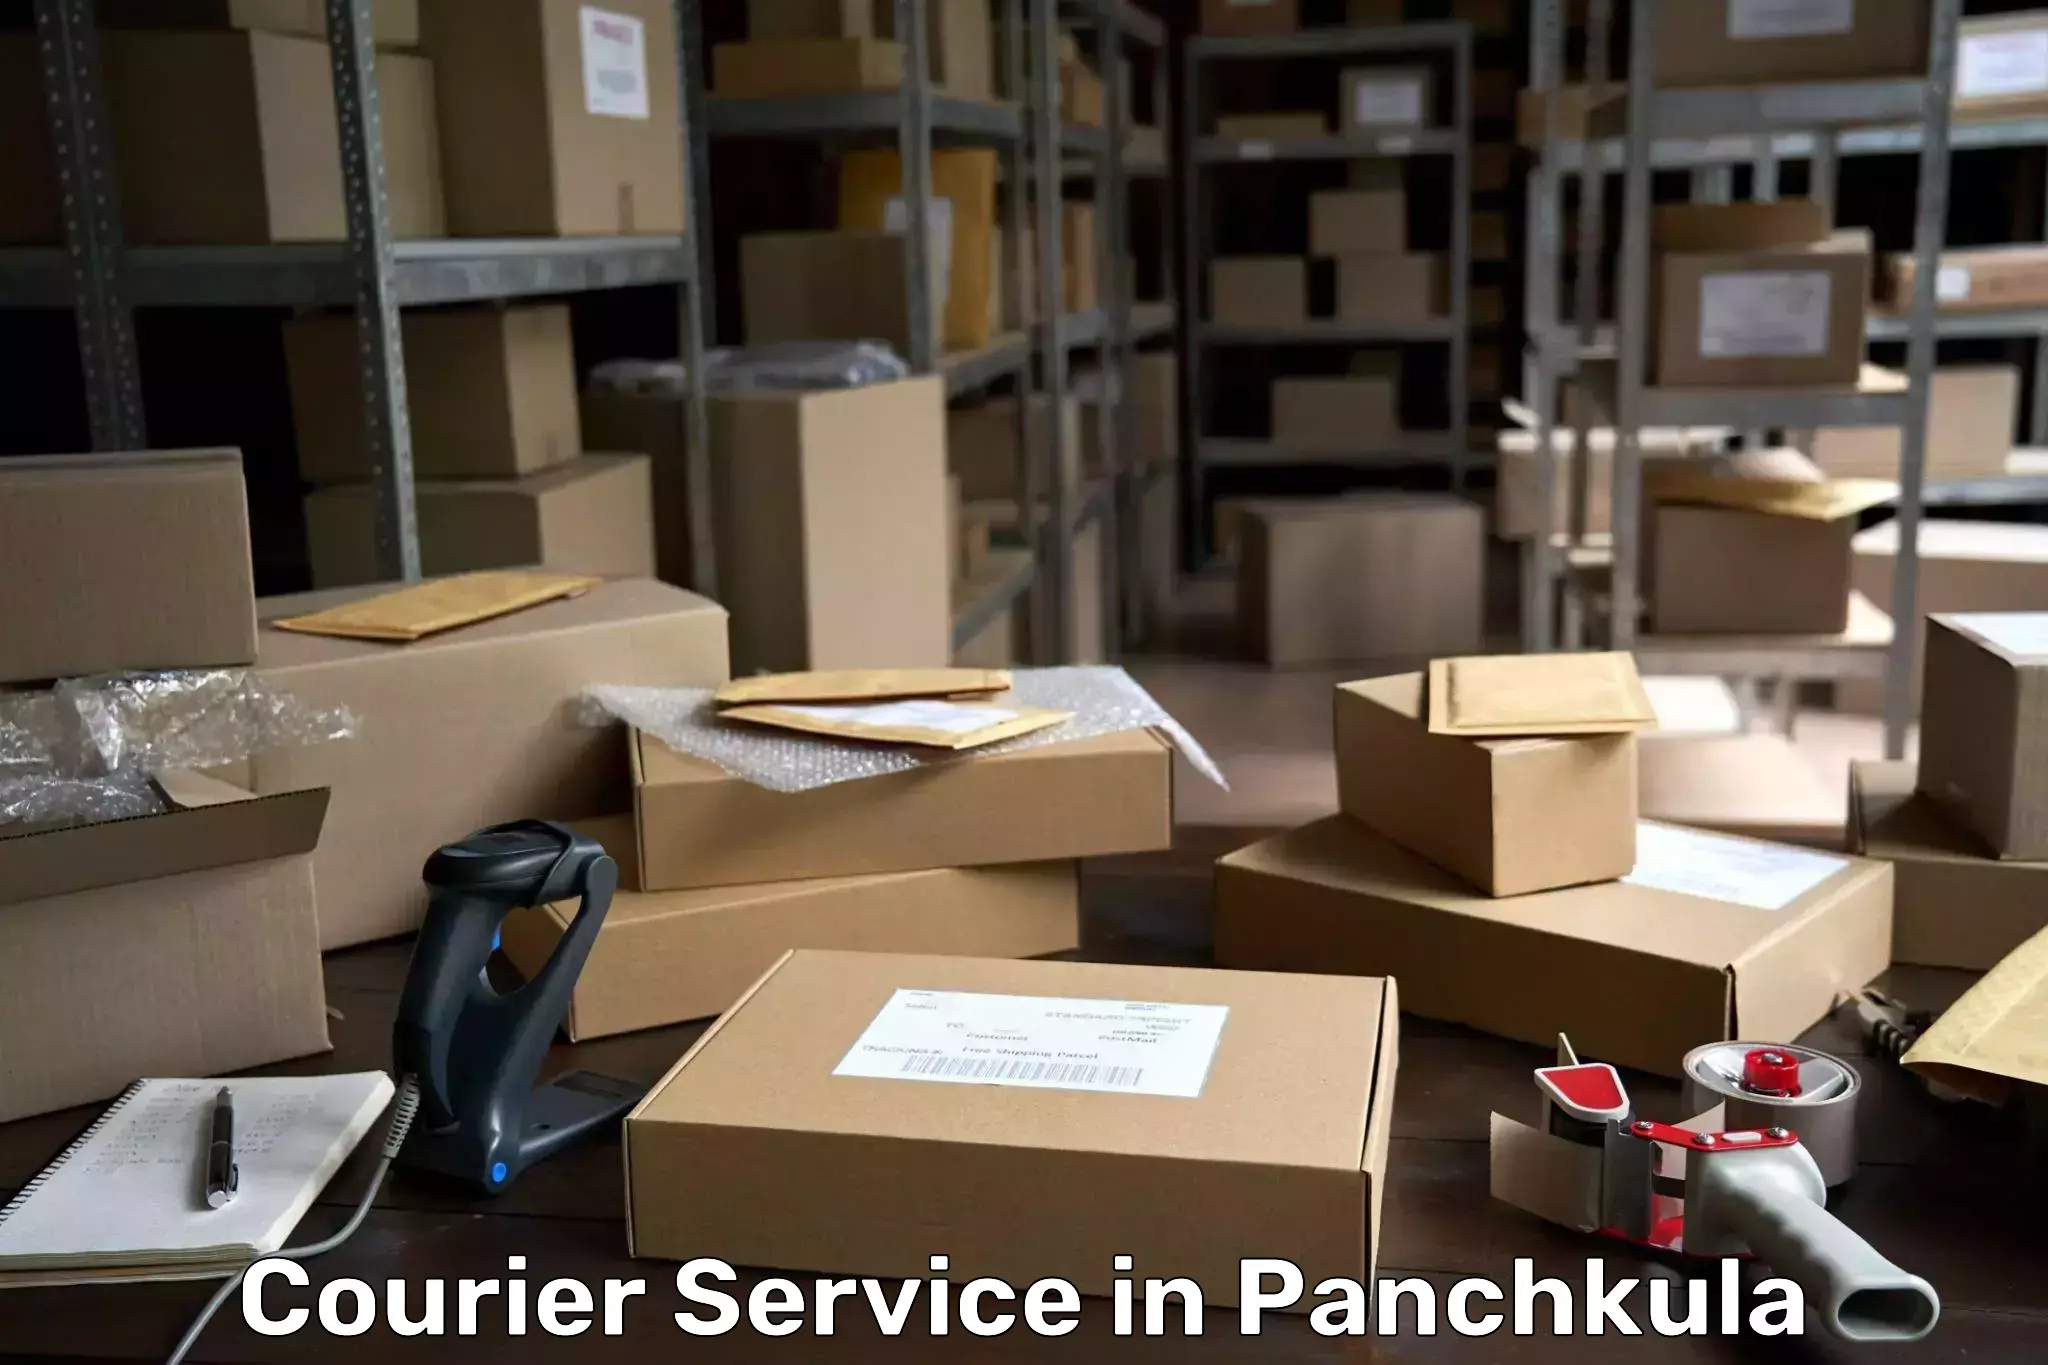 Advanced logistics management in Panchkula